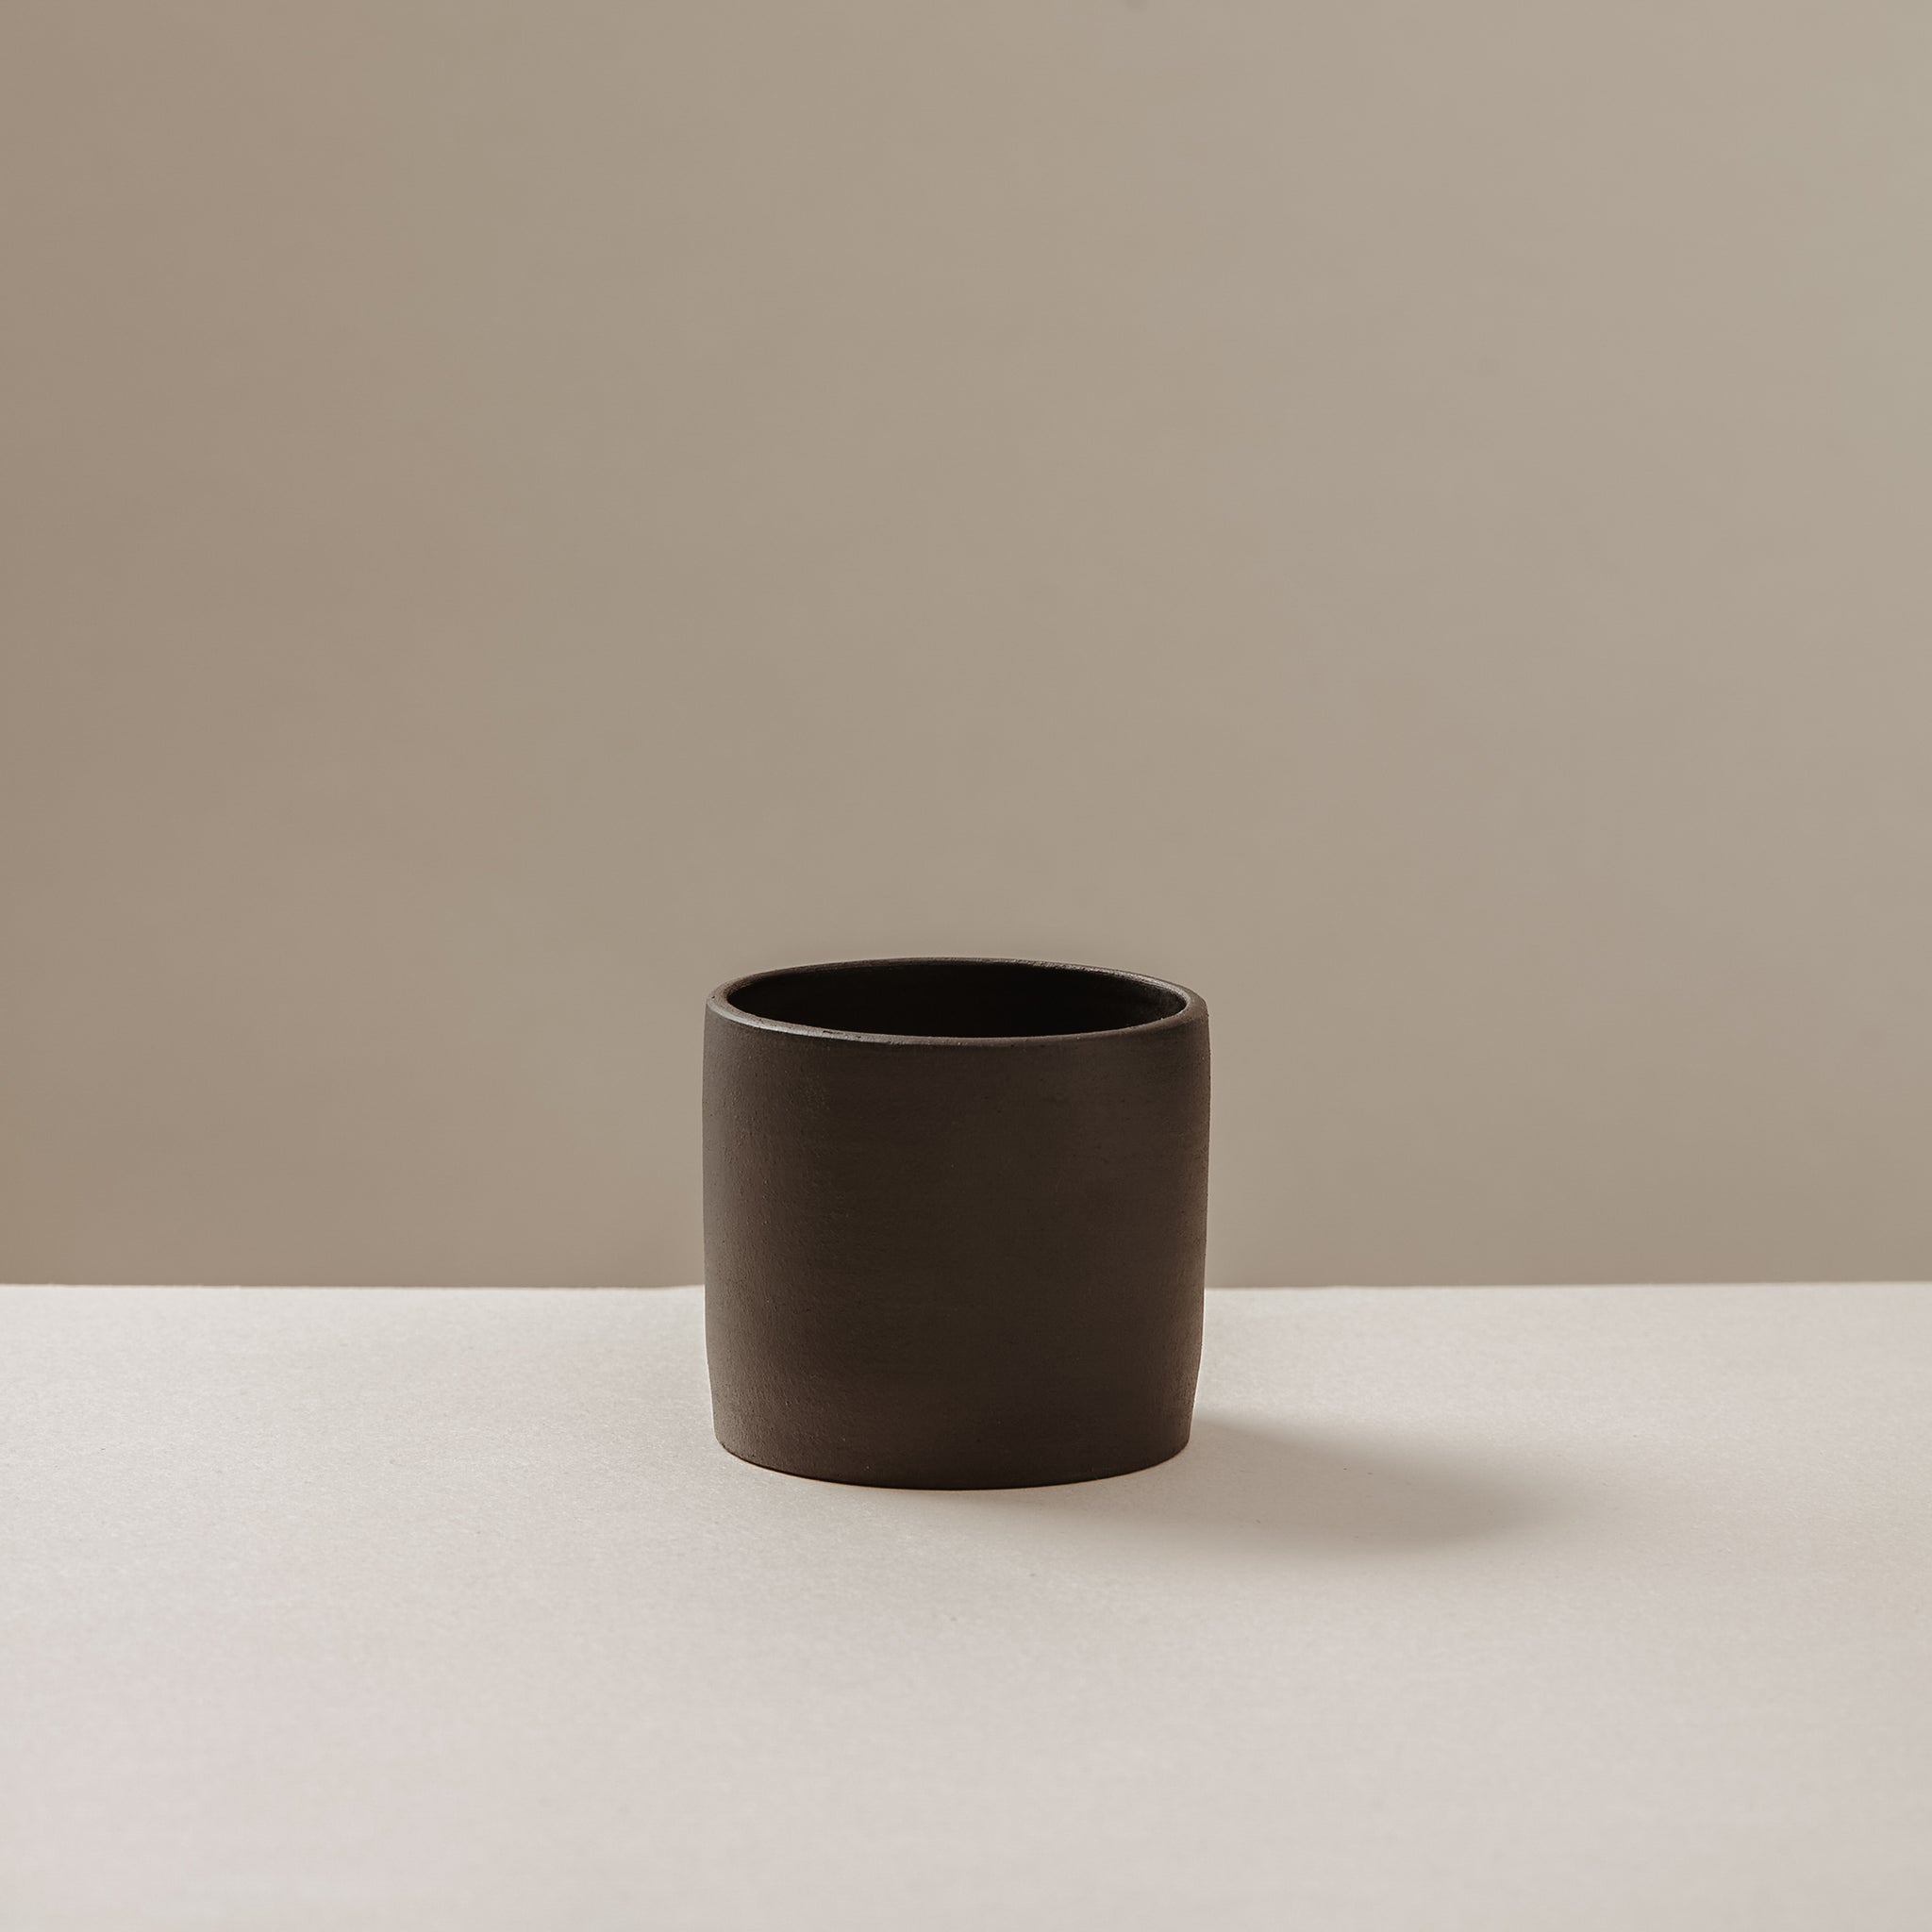 Espresso Tasse handgemacht aus Keramik clai studio Berlin Prenzlauer Berg